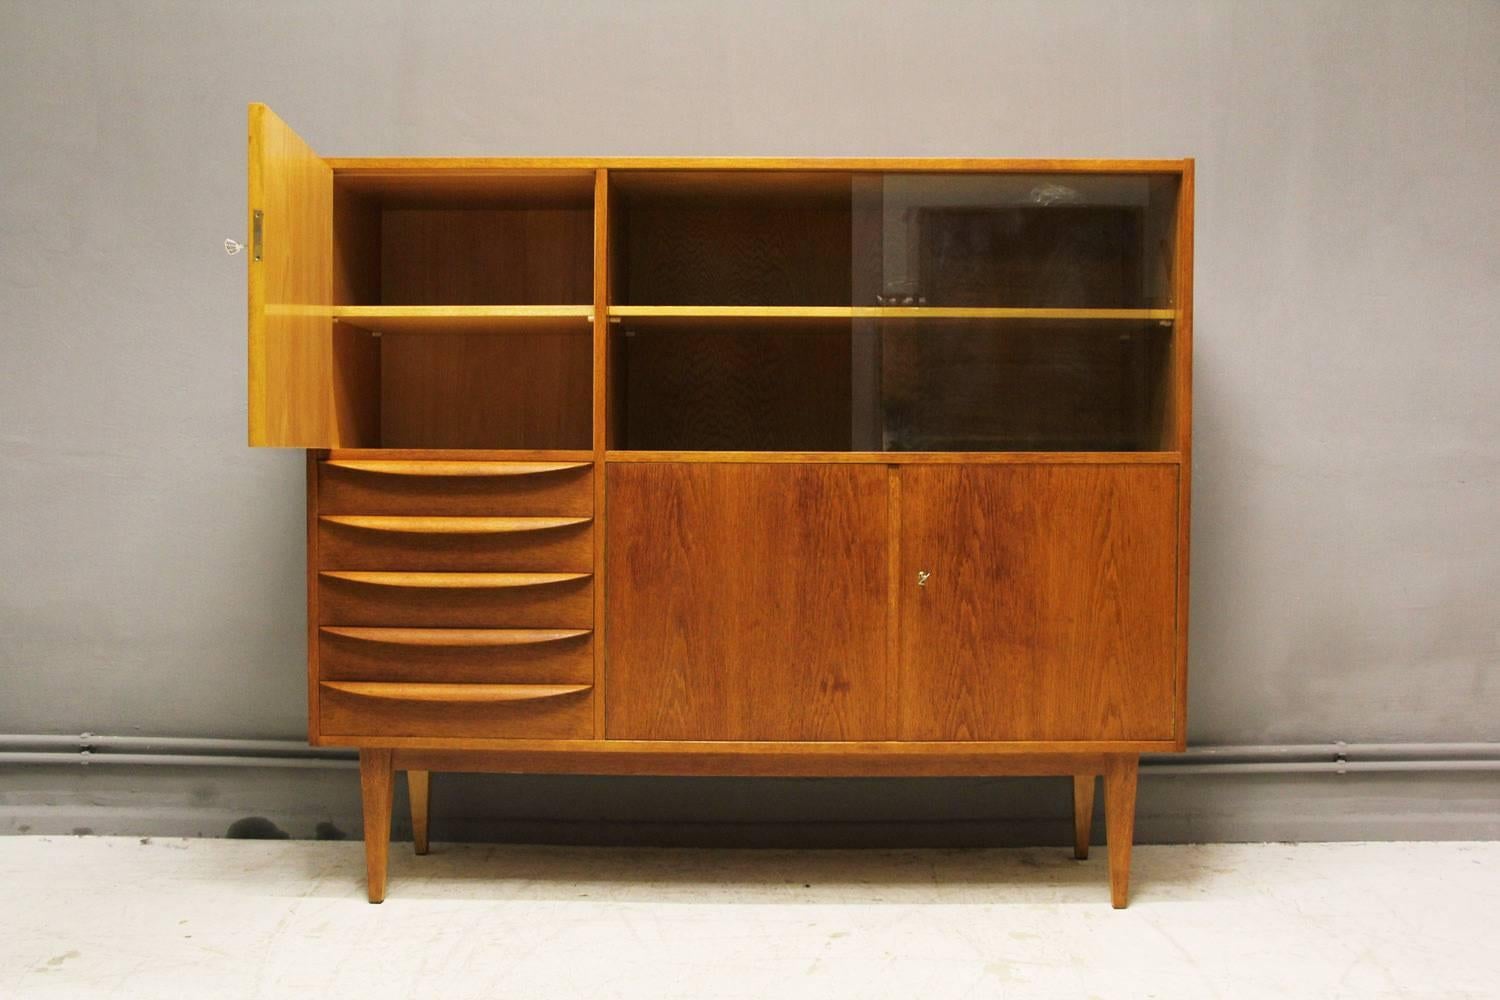 This Mid-Century Modern cabinet, model 